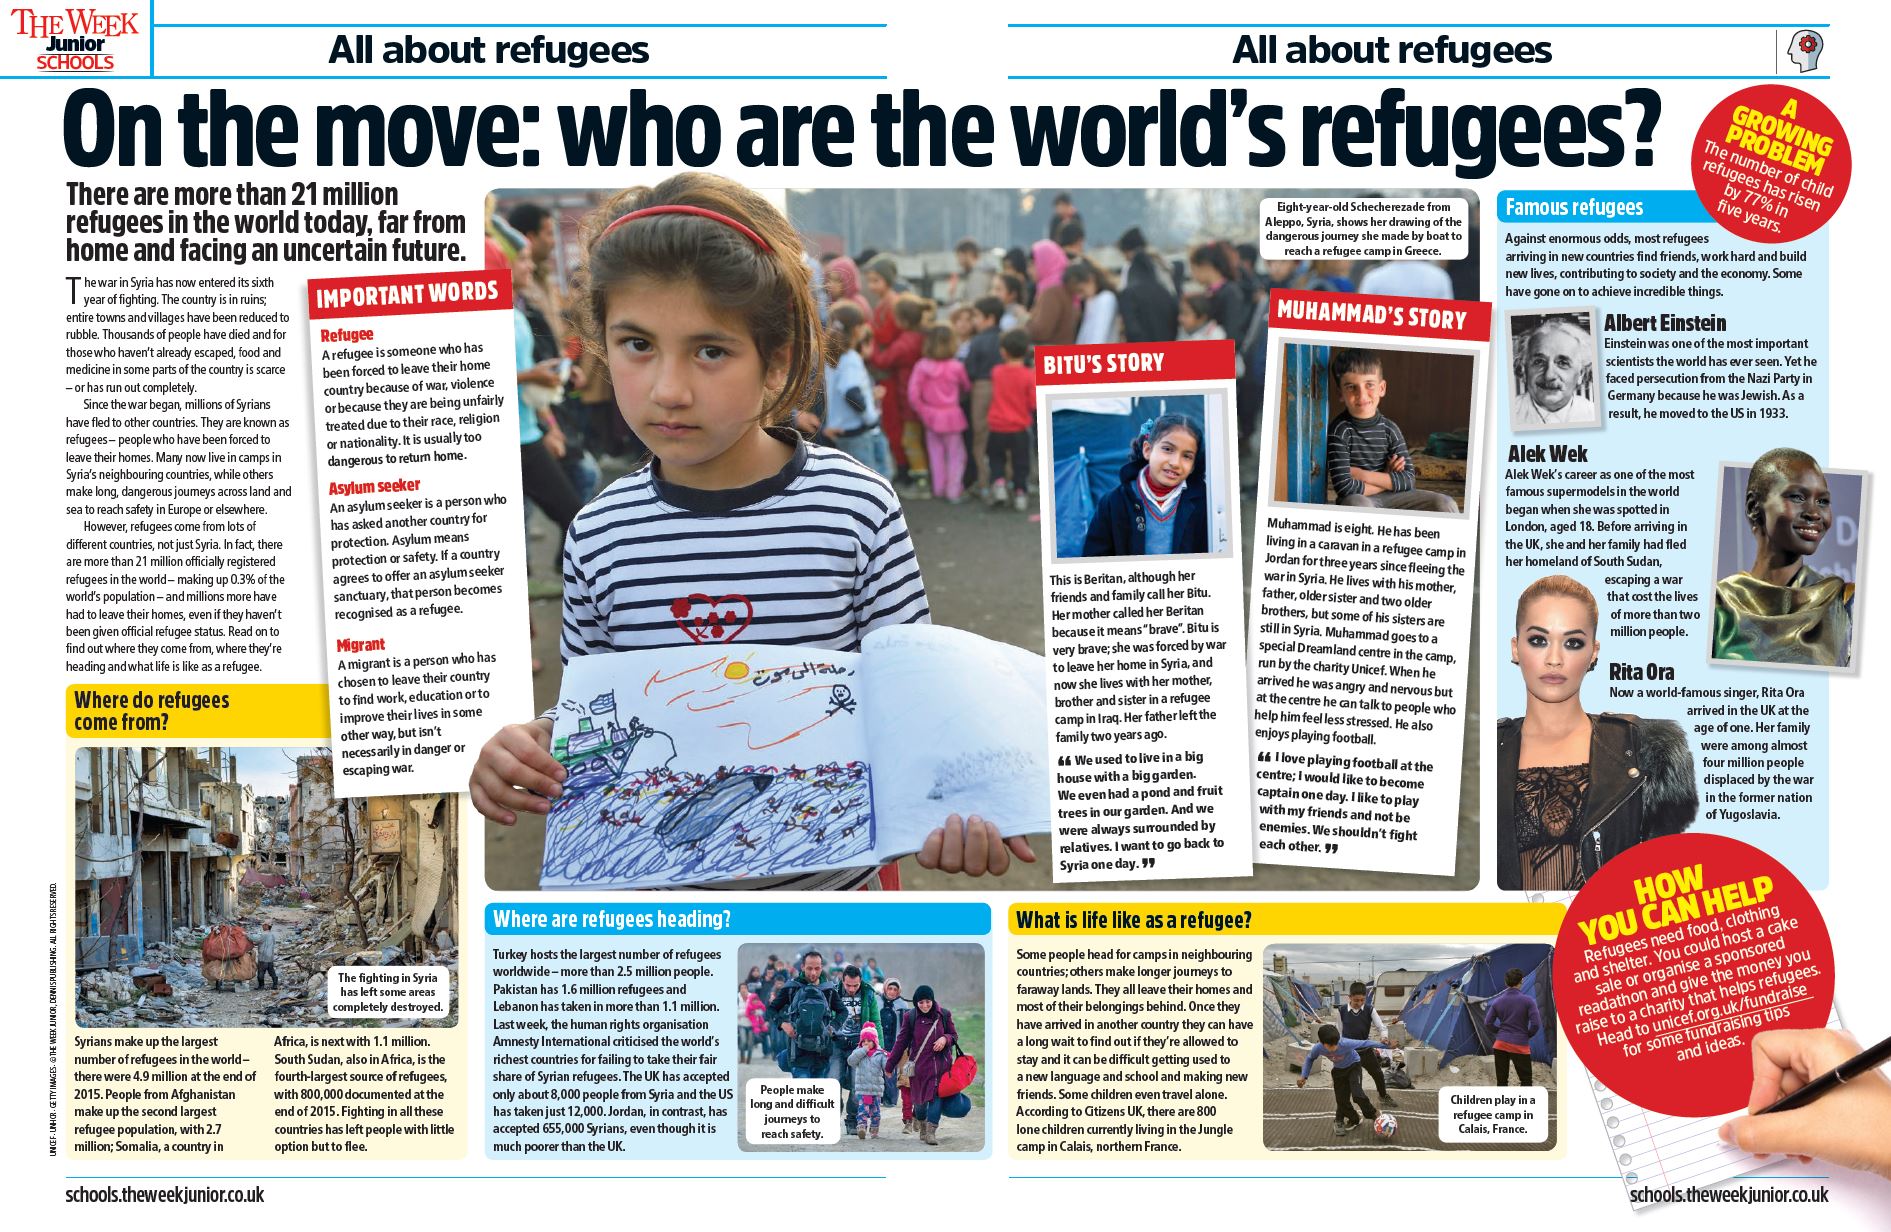 Refugees image